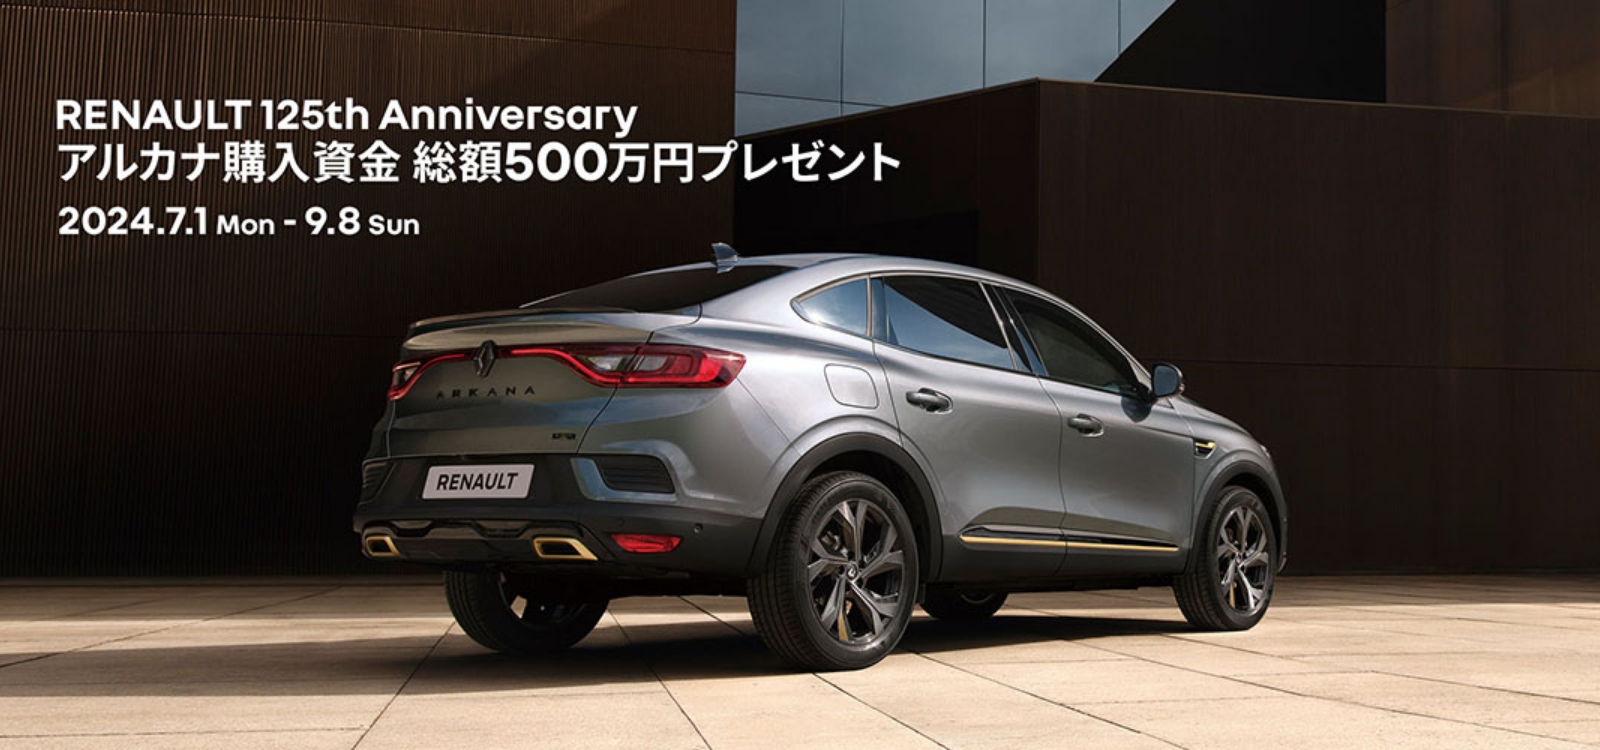 Renault Japon | RENAULT 125th Anniversary アルカナ購入資金総額500万円プレゼント